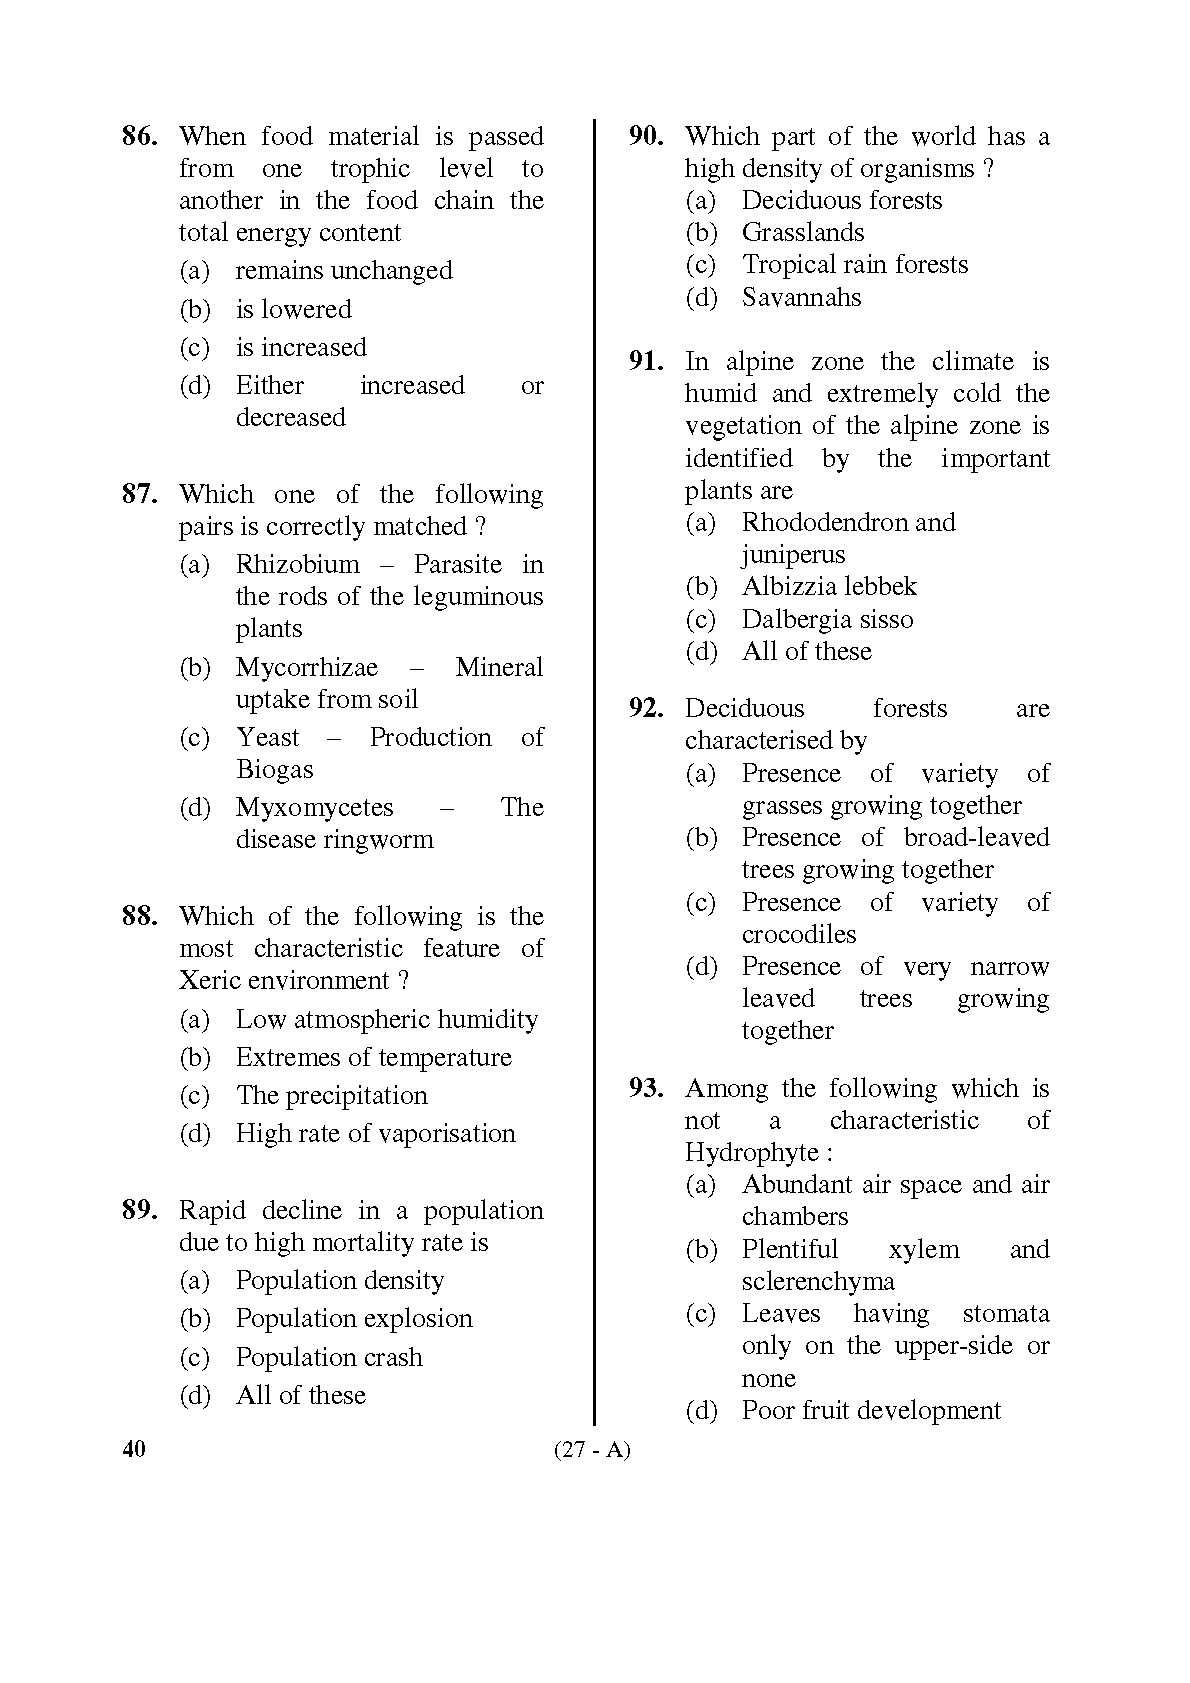 Karnataka PSC Drugs Analyst Botany Exam Sample Question Paper 27